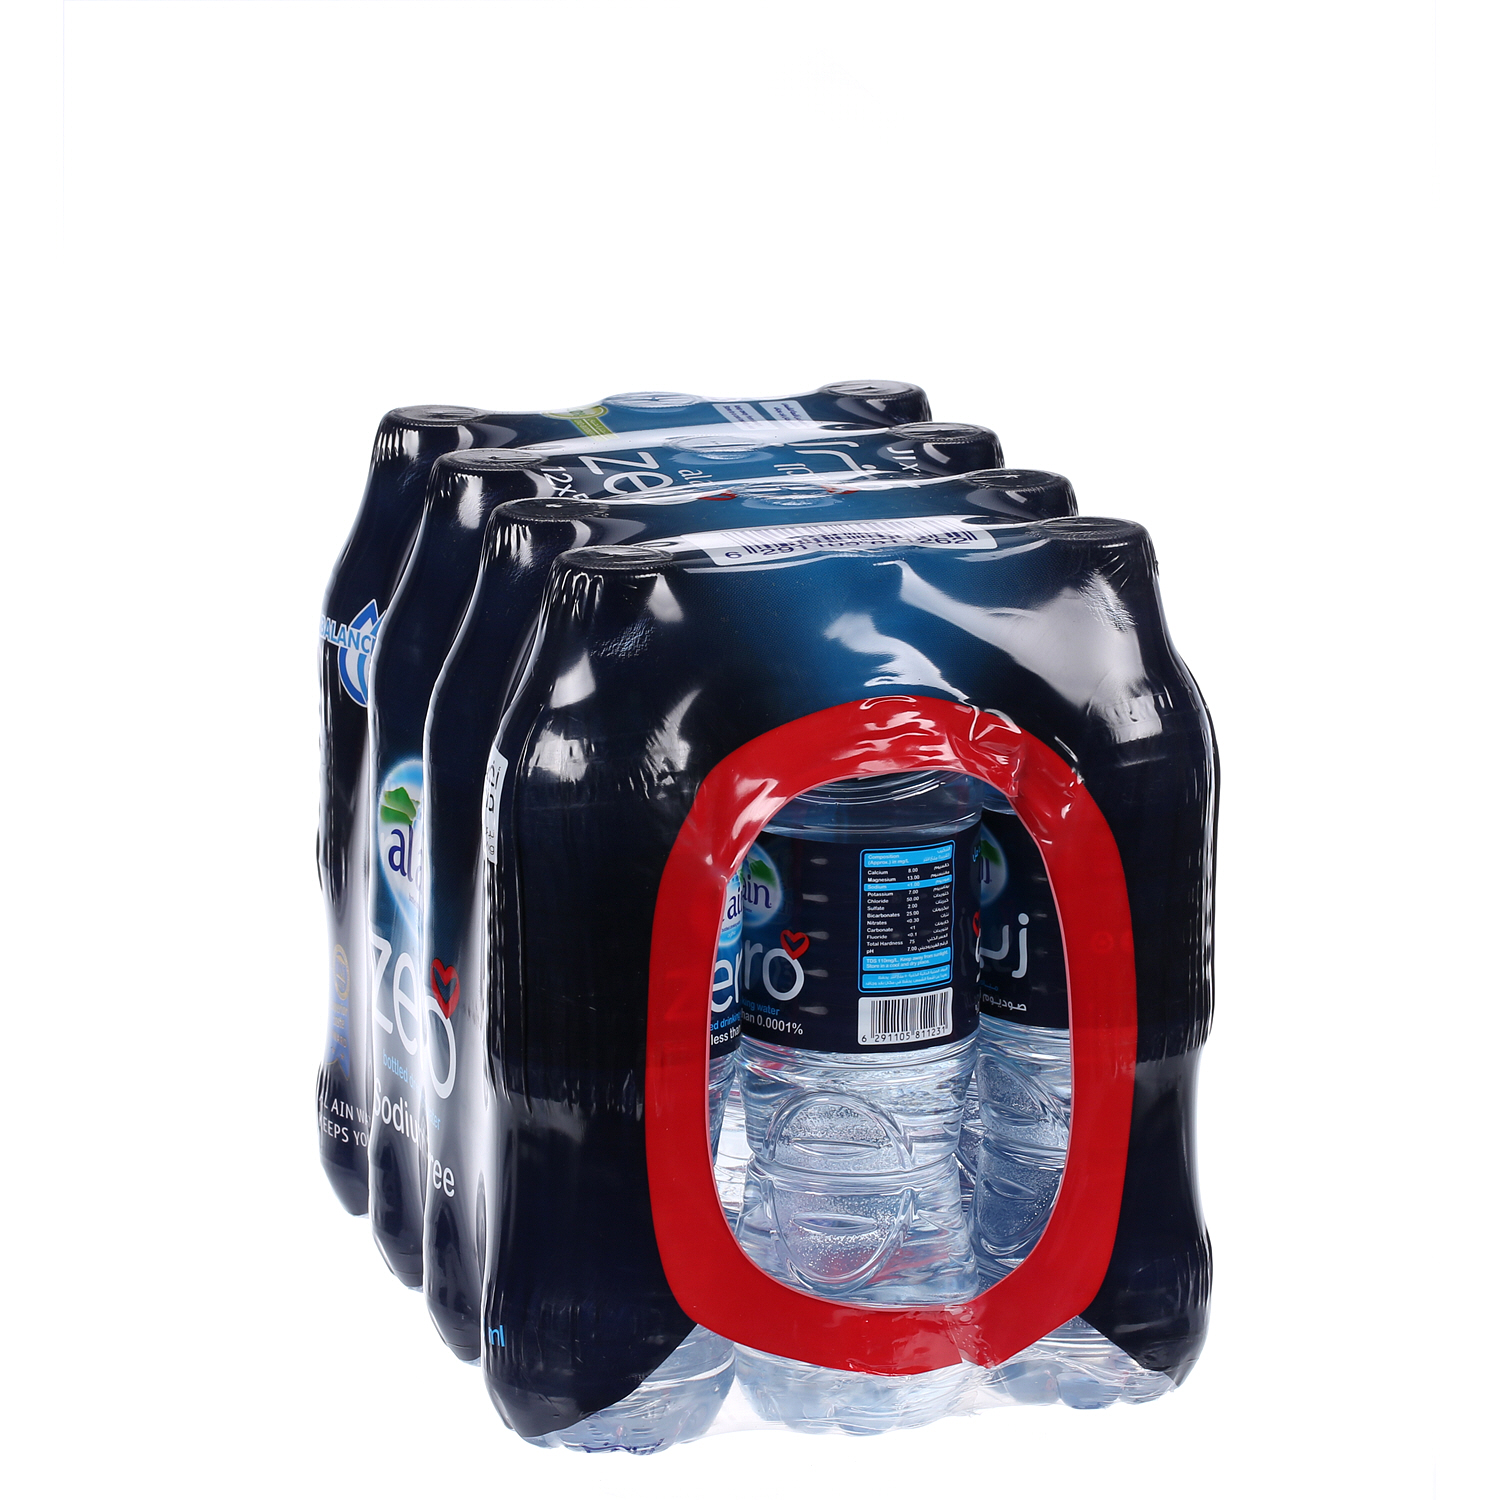 Al Ain Water Zero 500 ml × 12 Pack